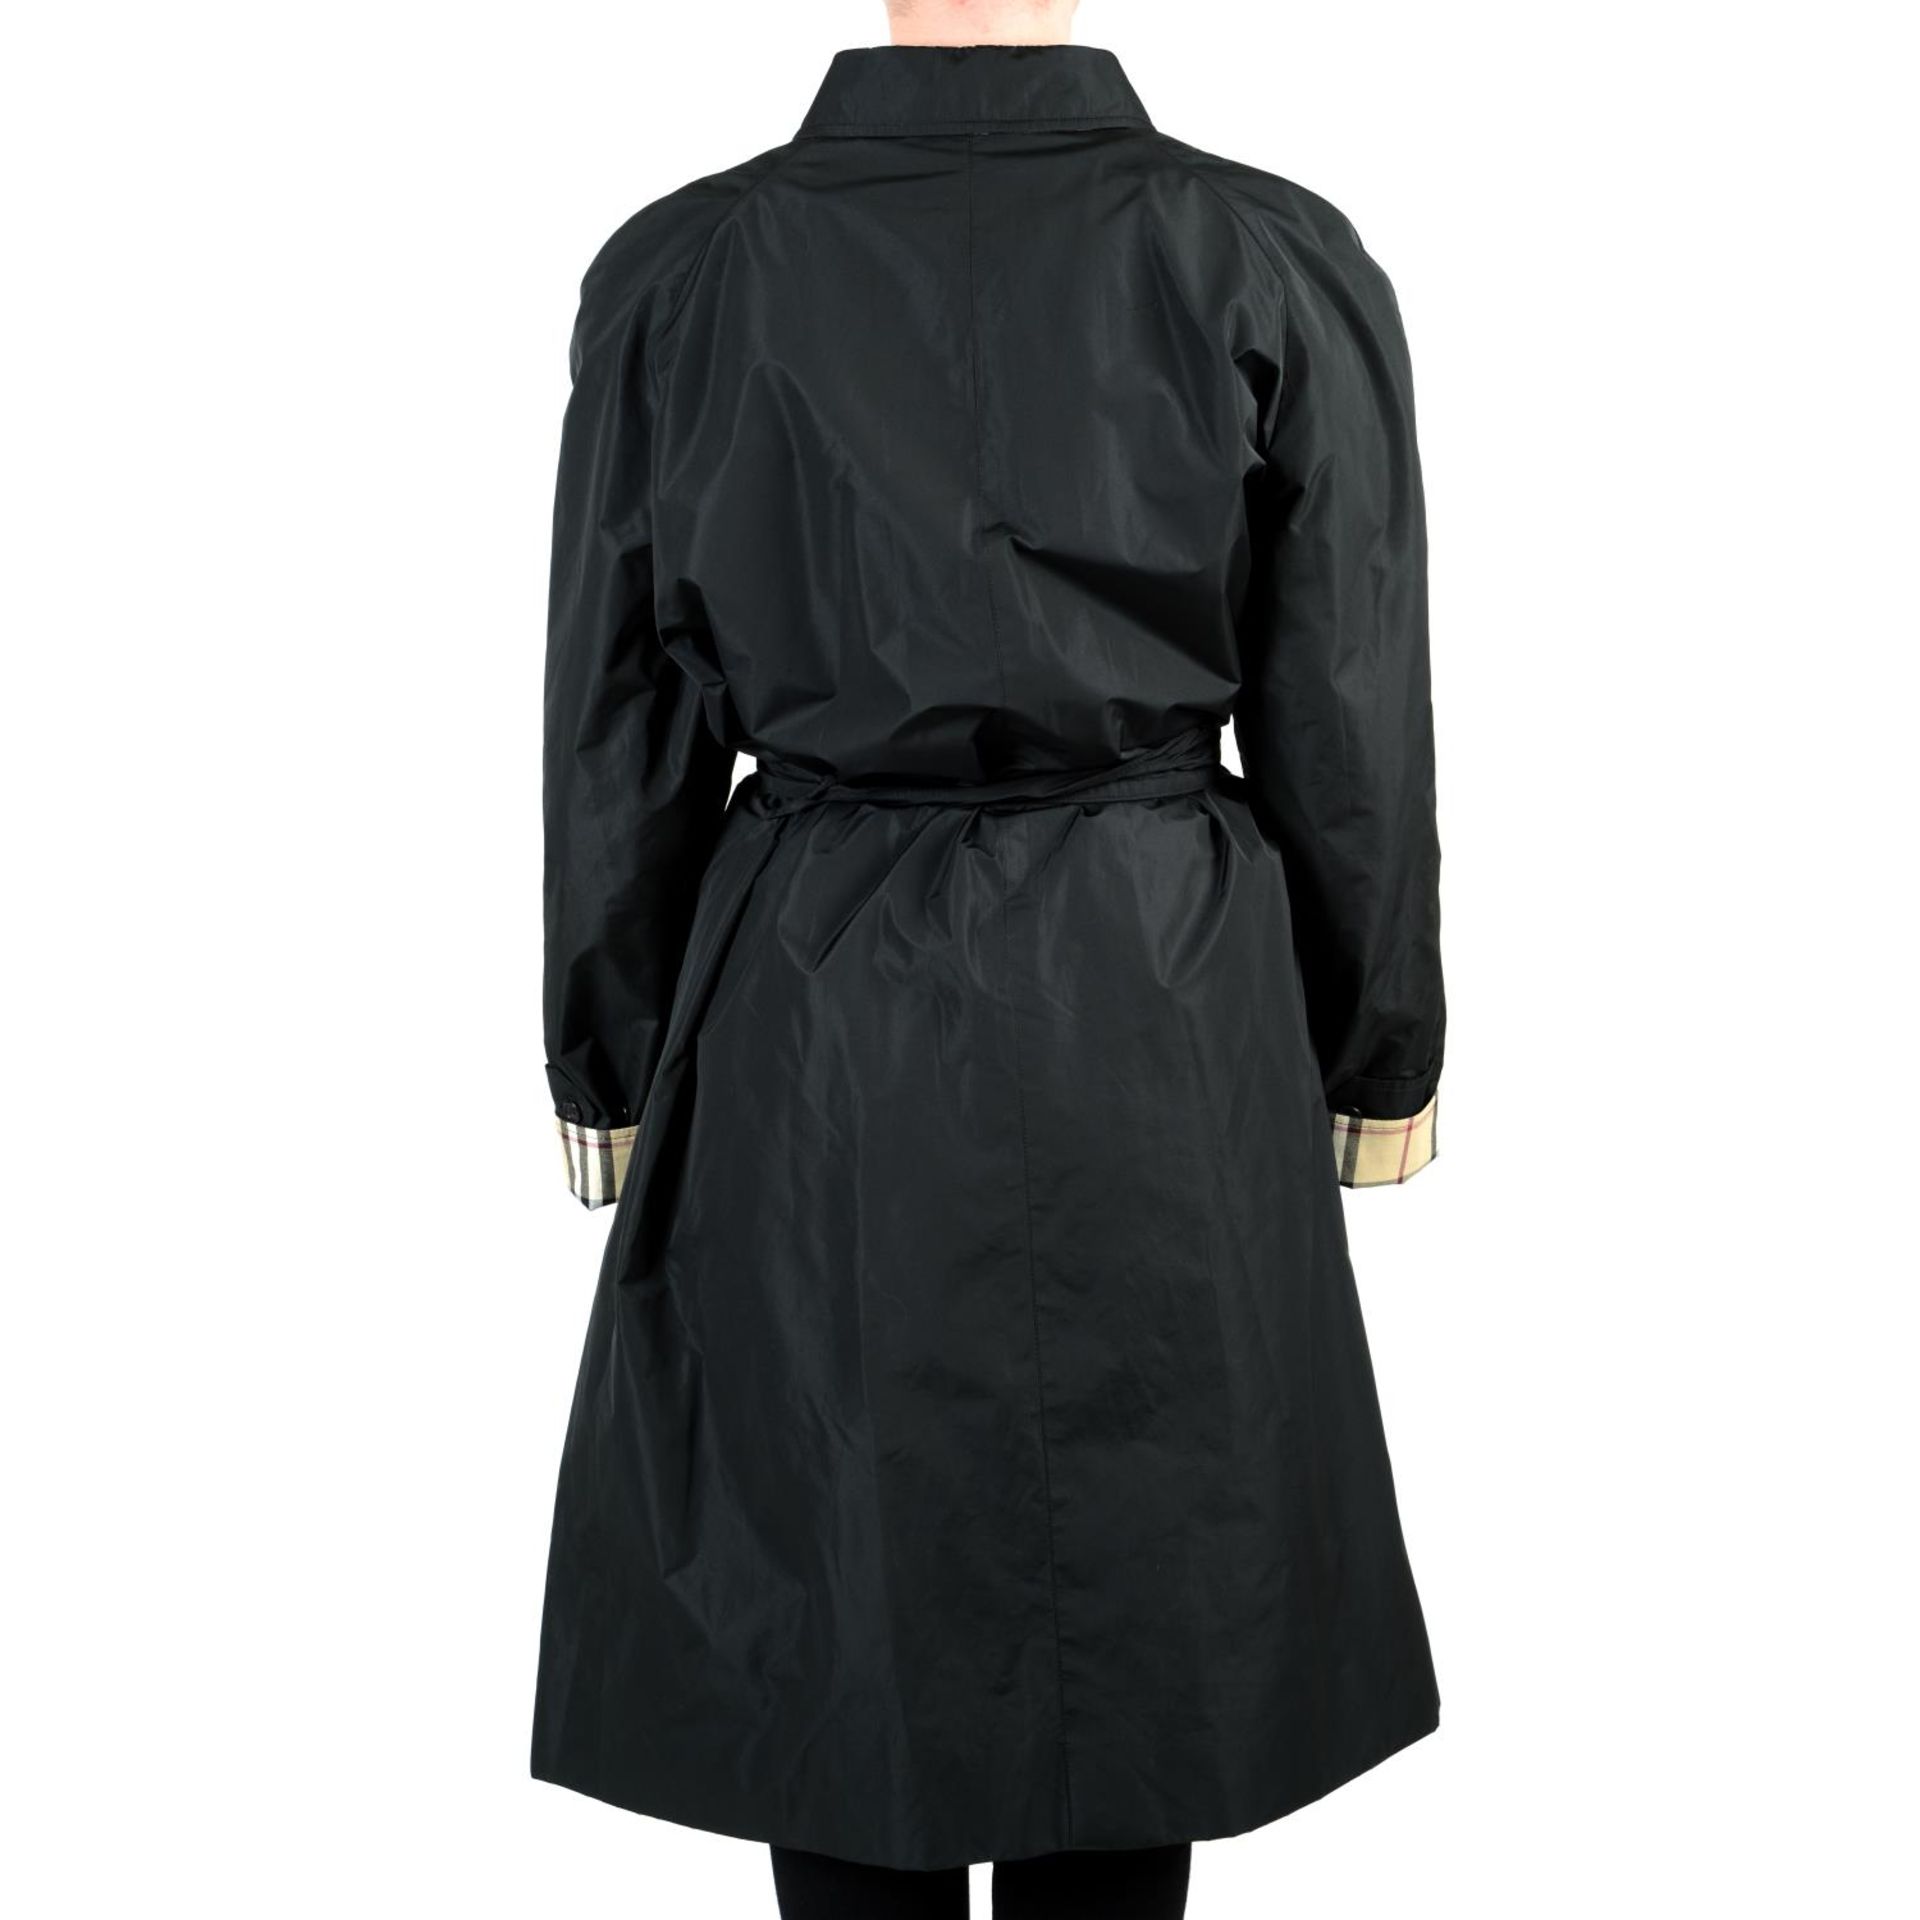 BURBERRY - a black raincoat. - Image 2 of 4